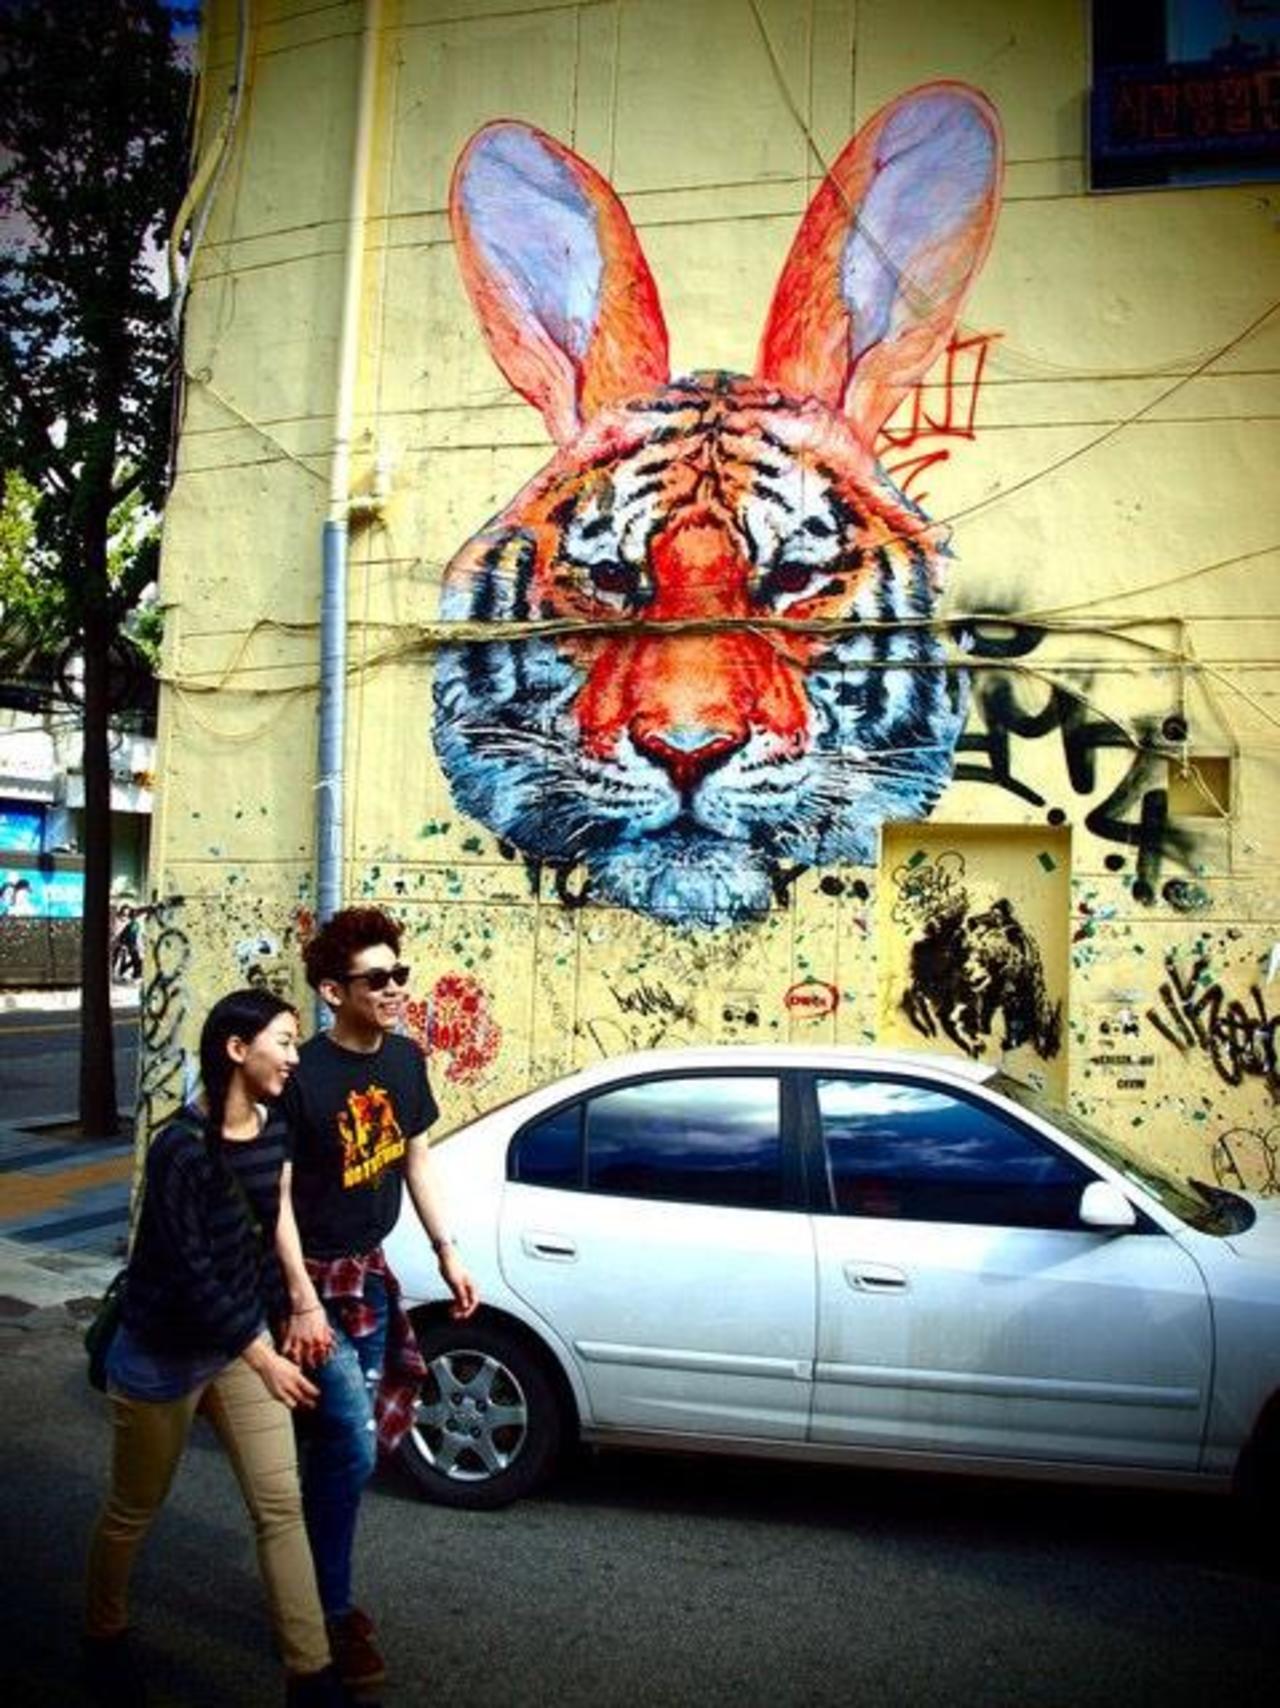 “@Pitchuskita: Gaia / "Walk on the Wild Side”
Seoul, South Korea

#streetart #art #graffiti http://t.co/re4YACsQd3”